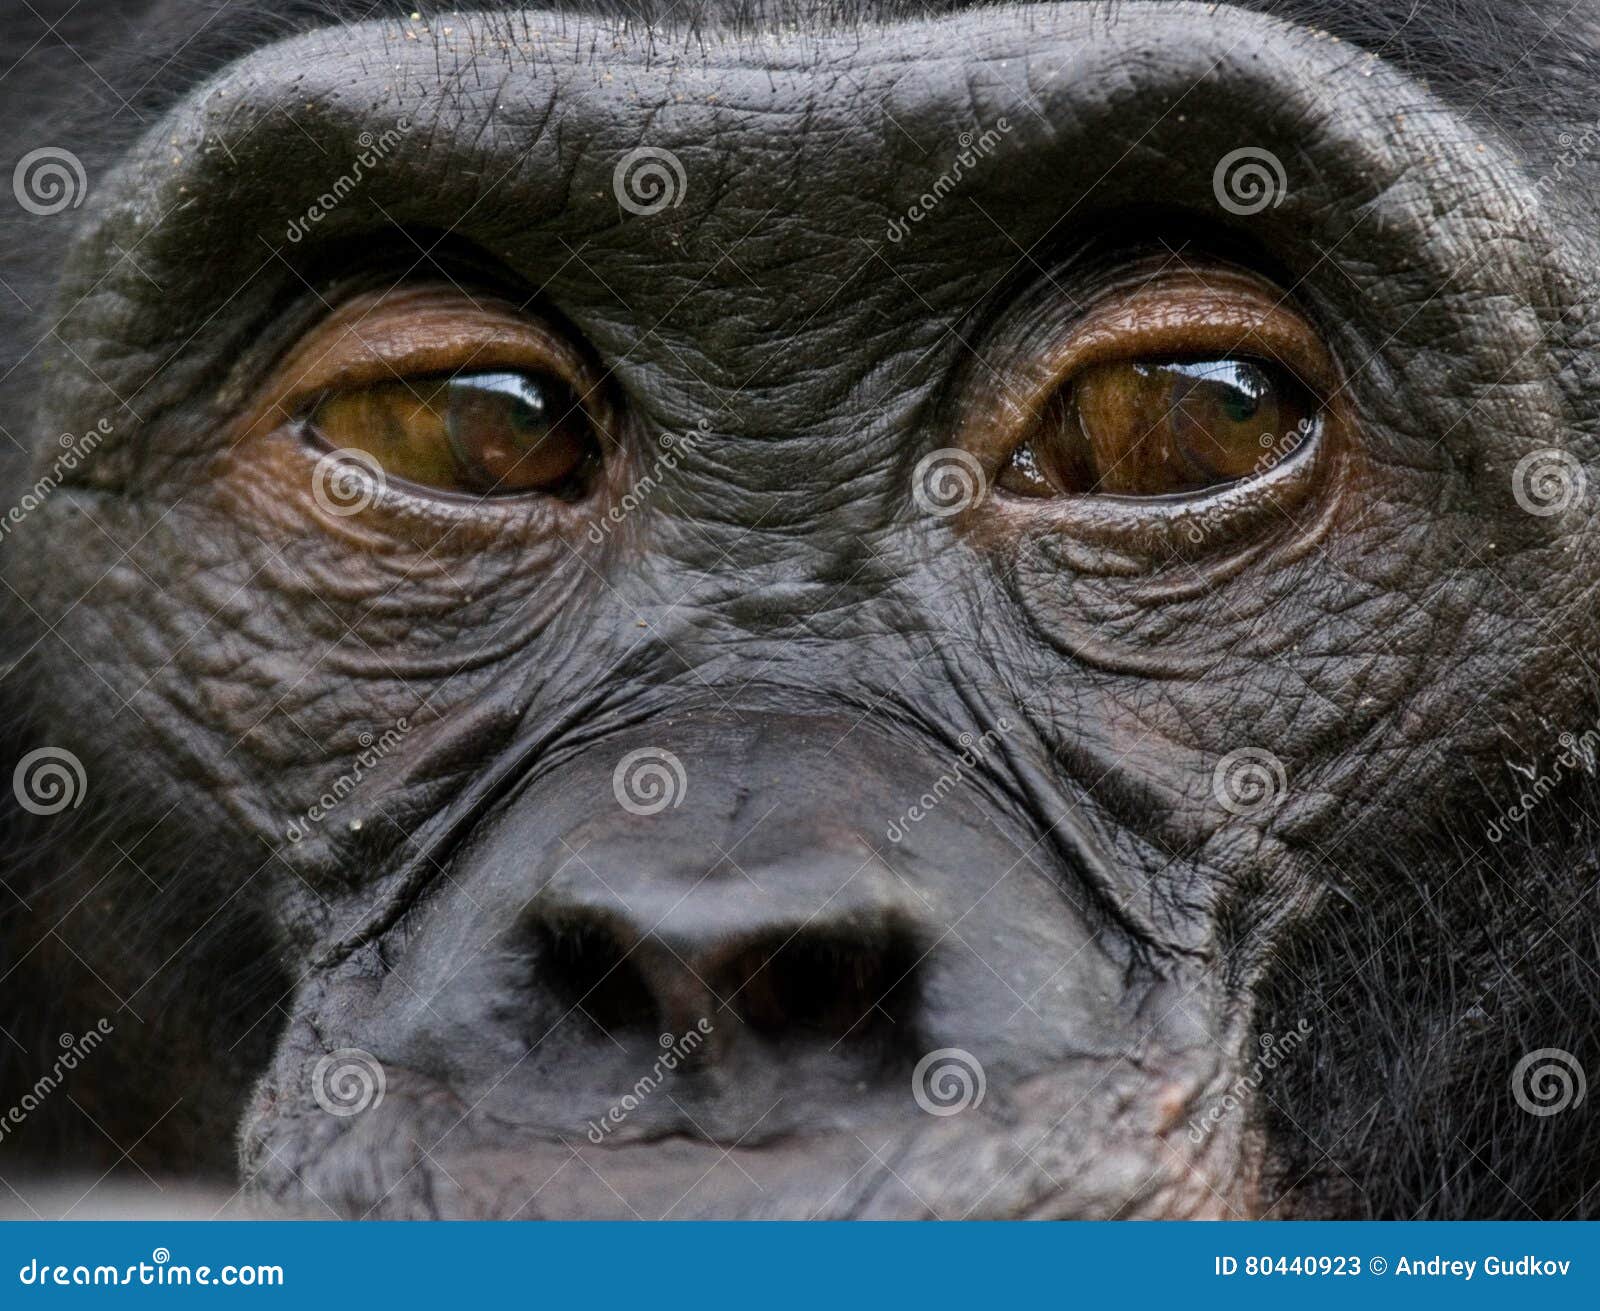 portrait of bonobos. close-up. democratic republic of congo. lola ya bonobo national park.